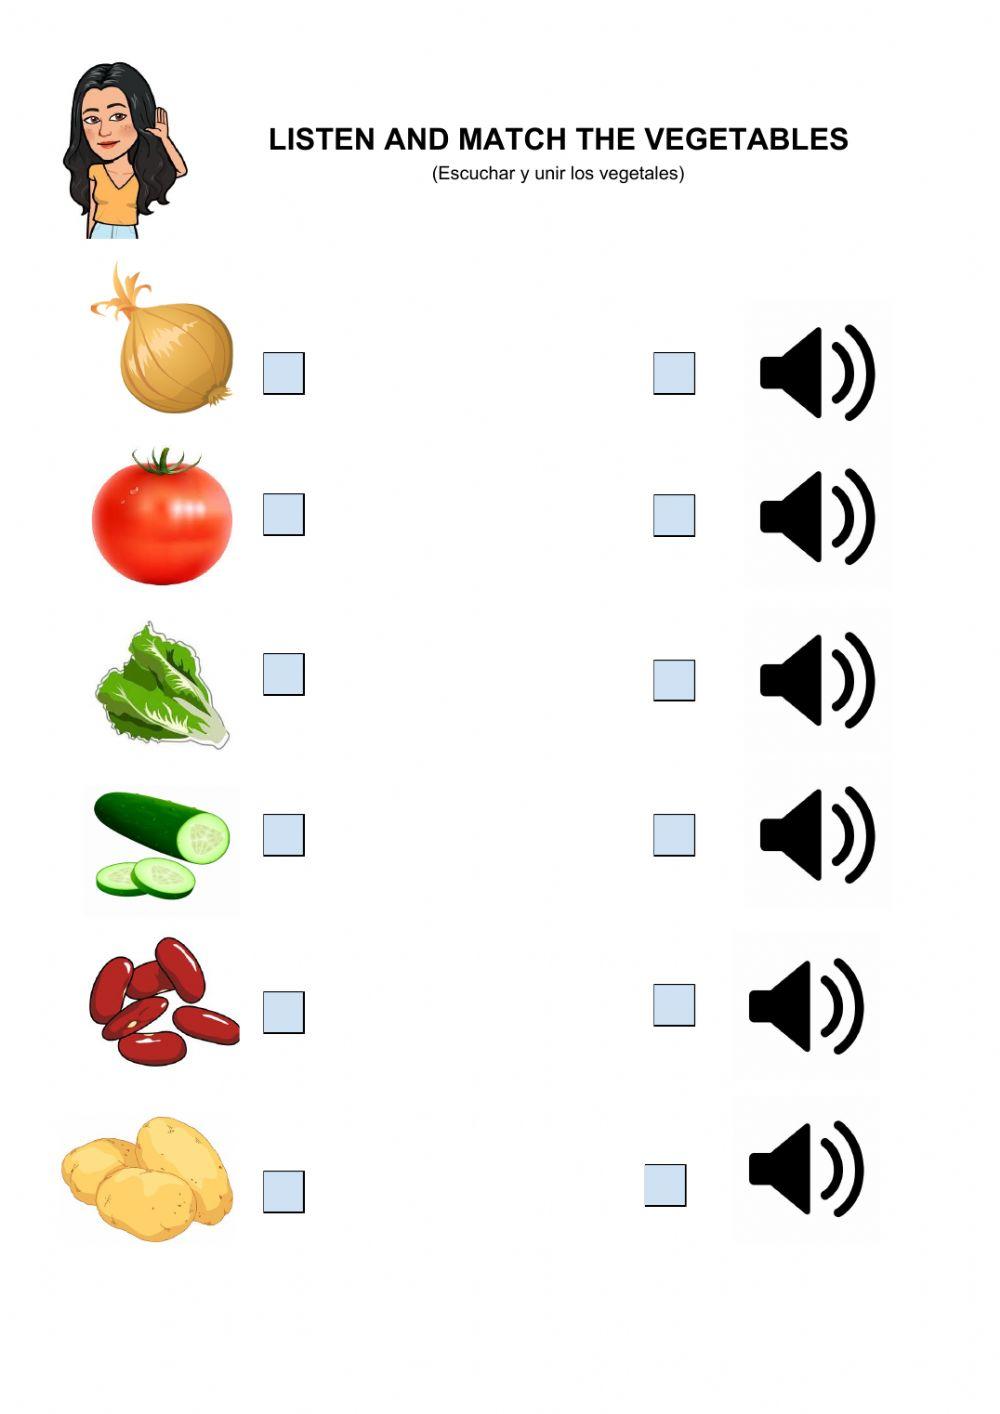 Listen and match vegetables